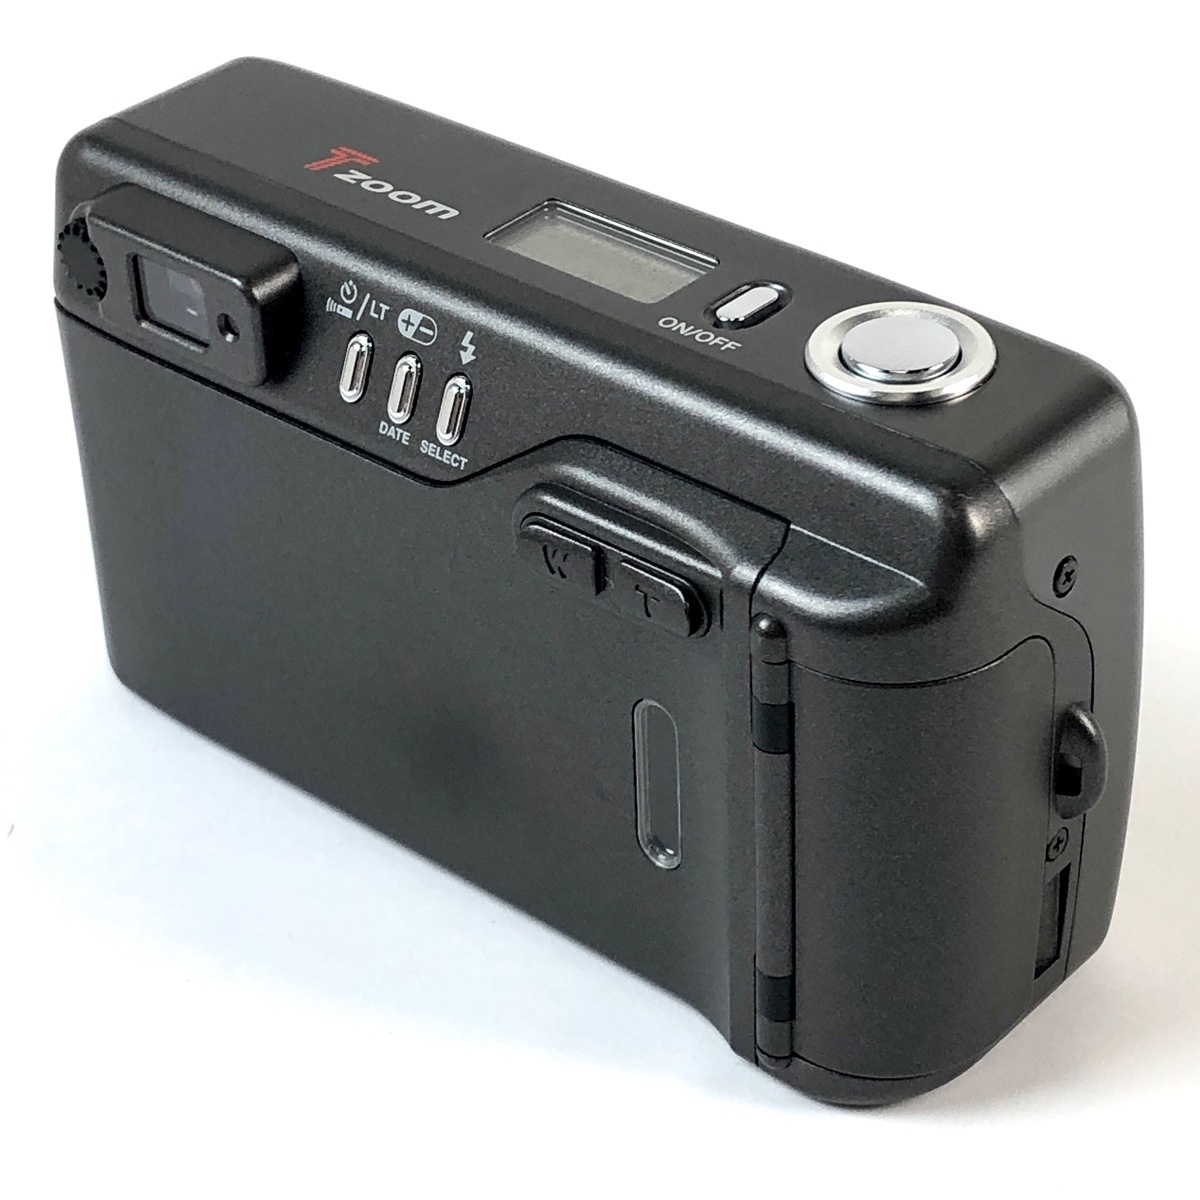  both Sera KYOCERA T ZOOM film compact camera [ used ]